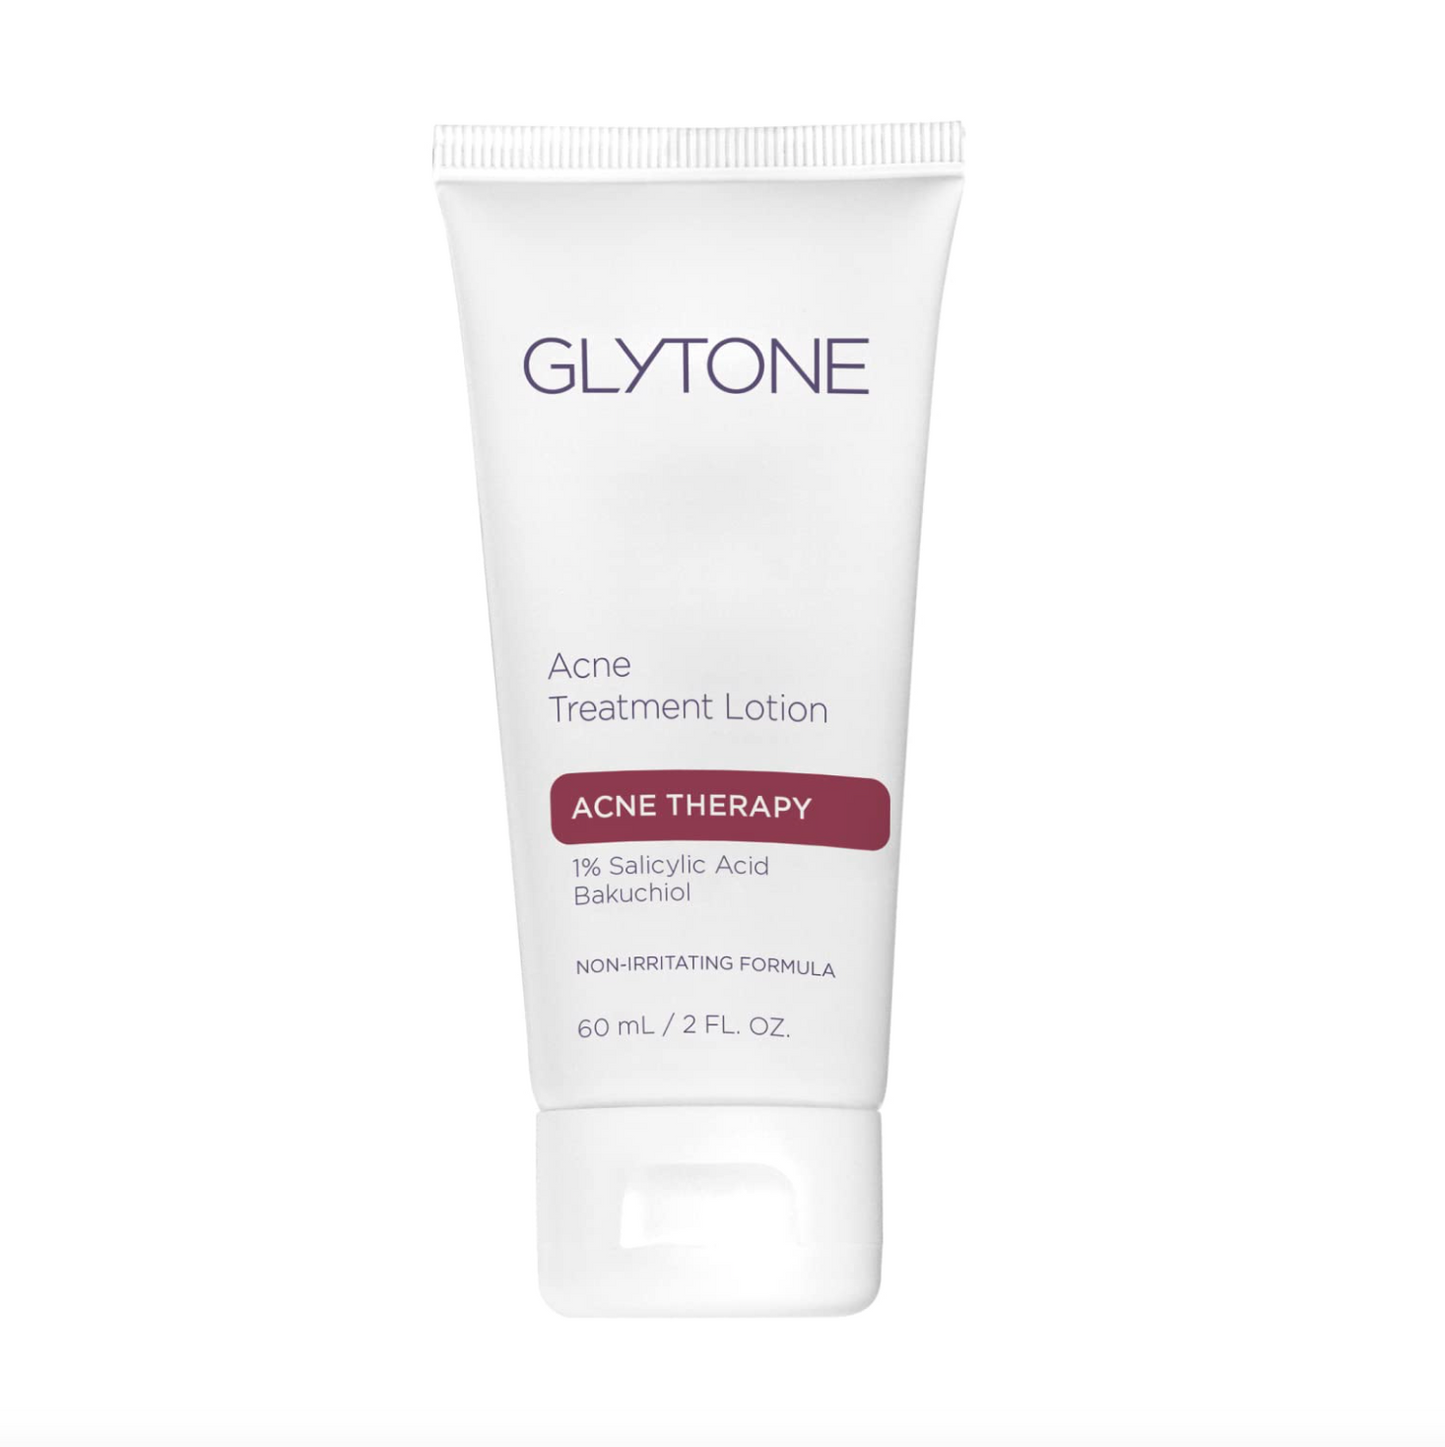 Glytone Acne Treatment Lotion